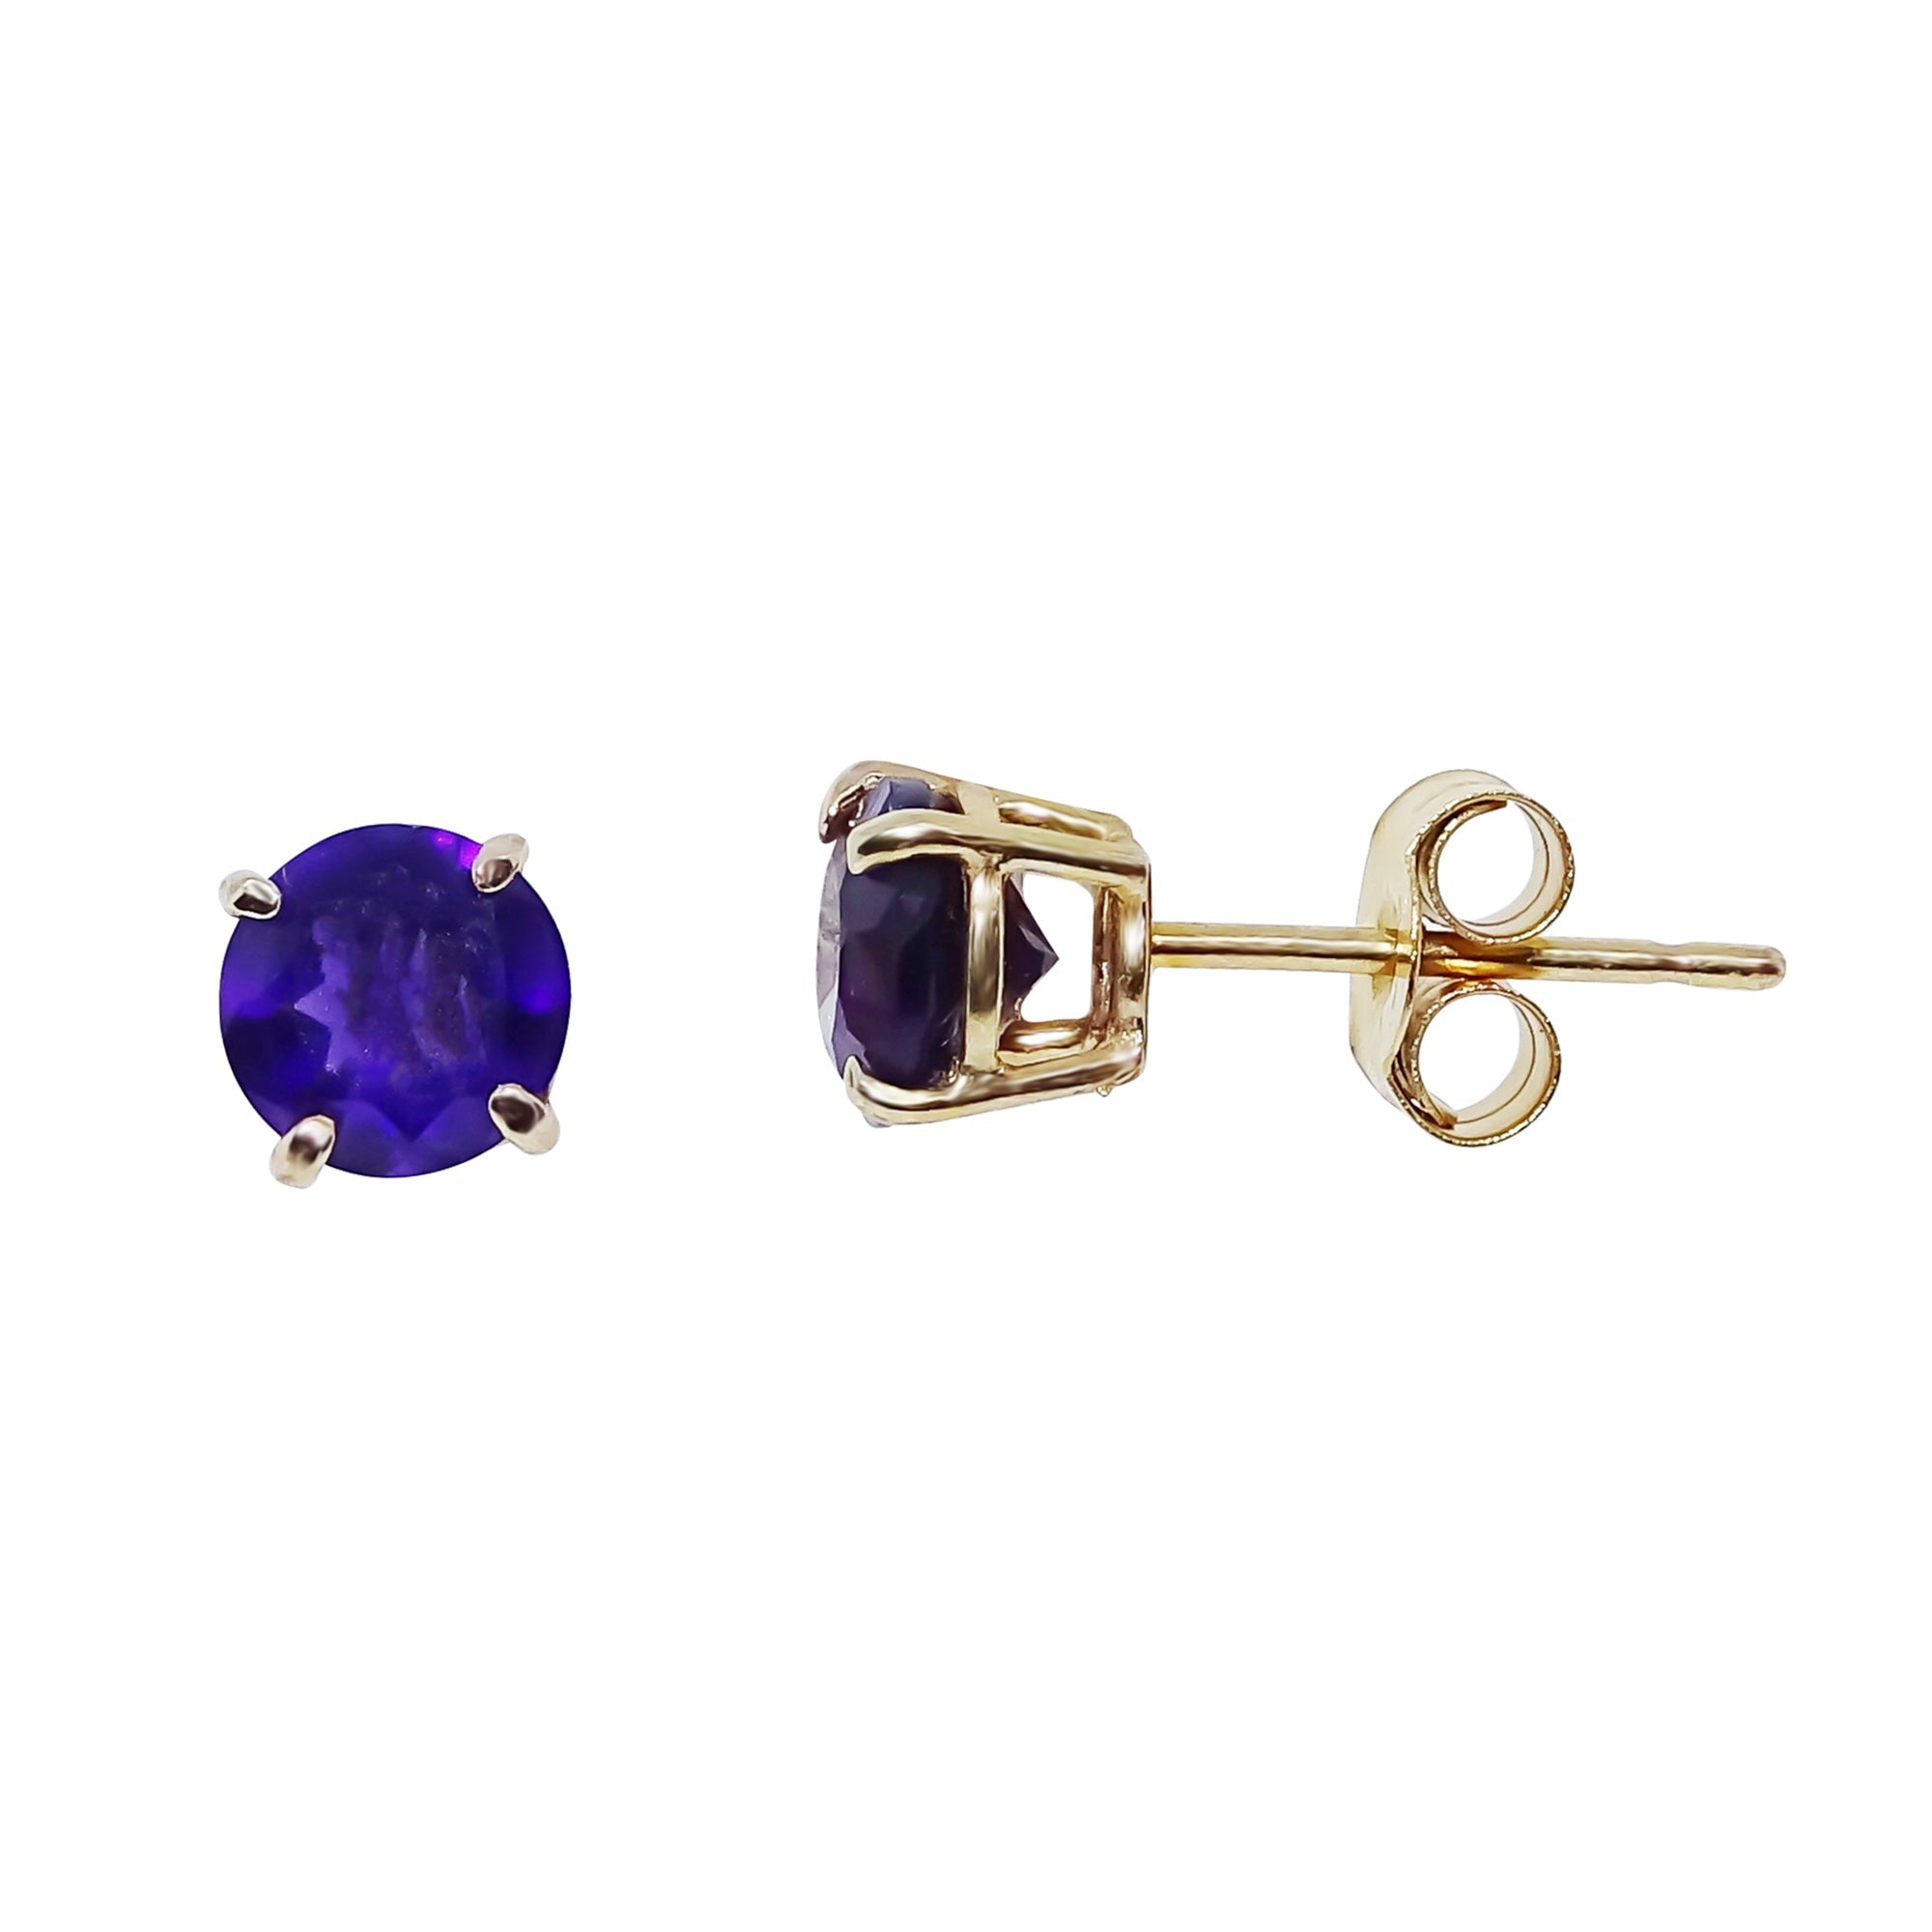 9ct gold 5mm round amethyst stud earrings